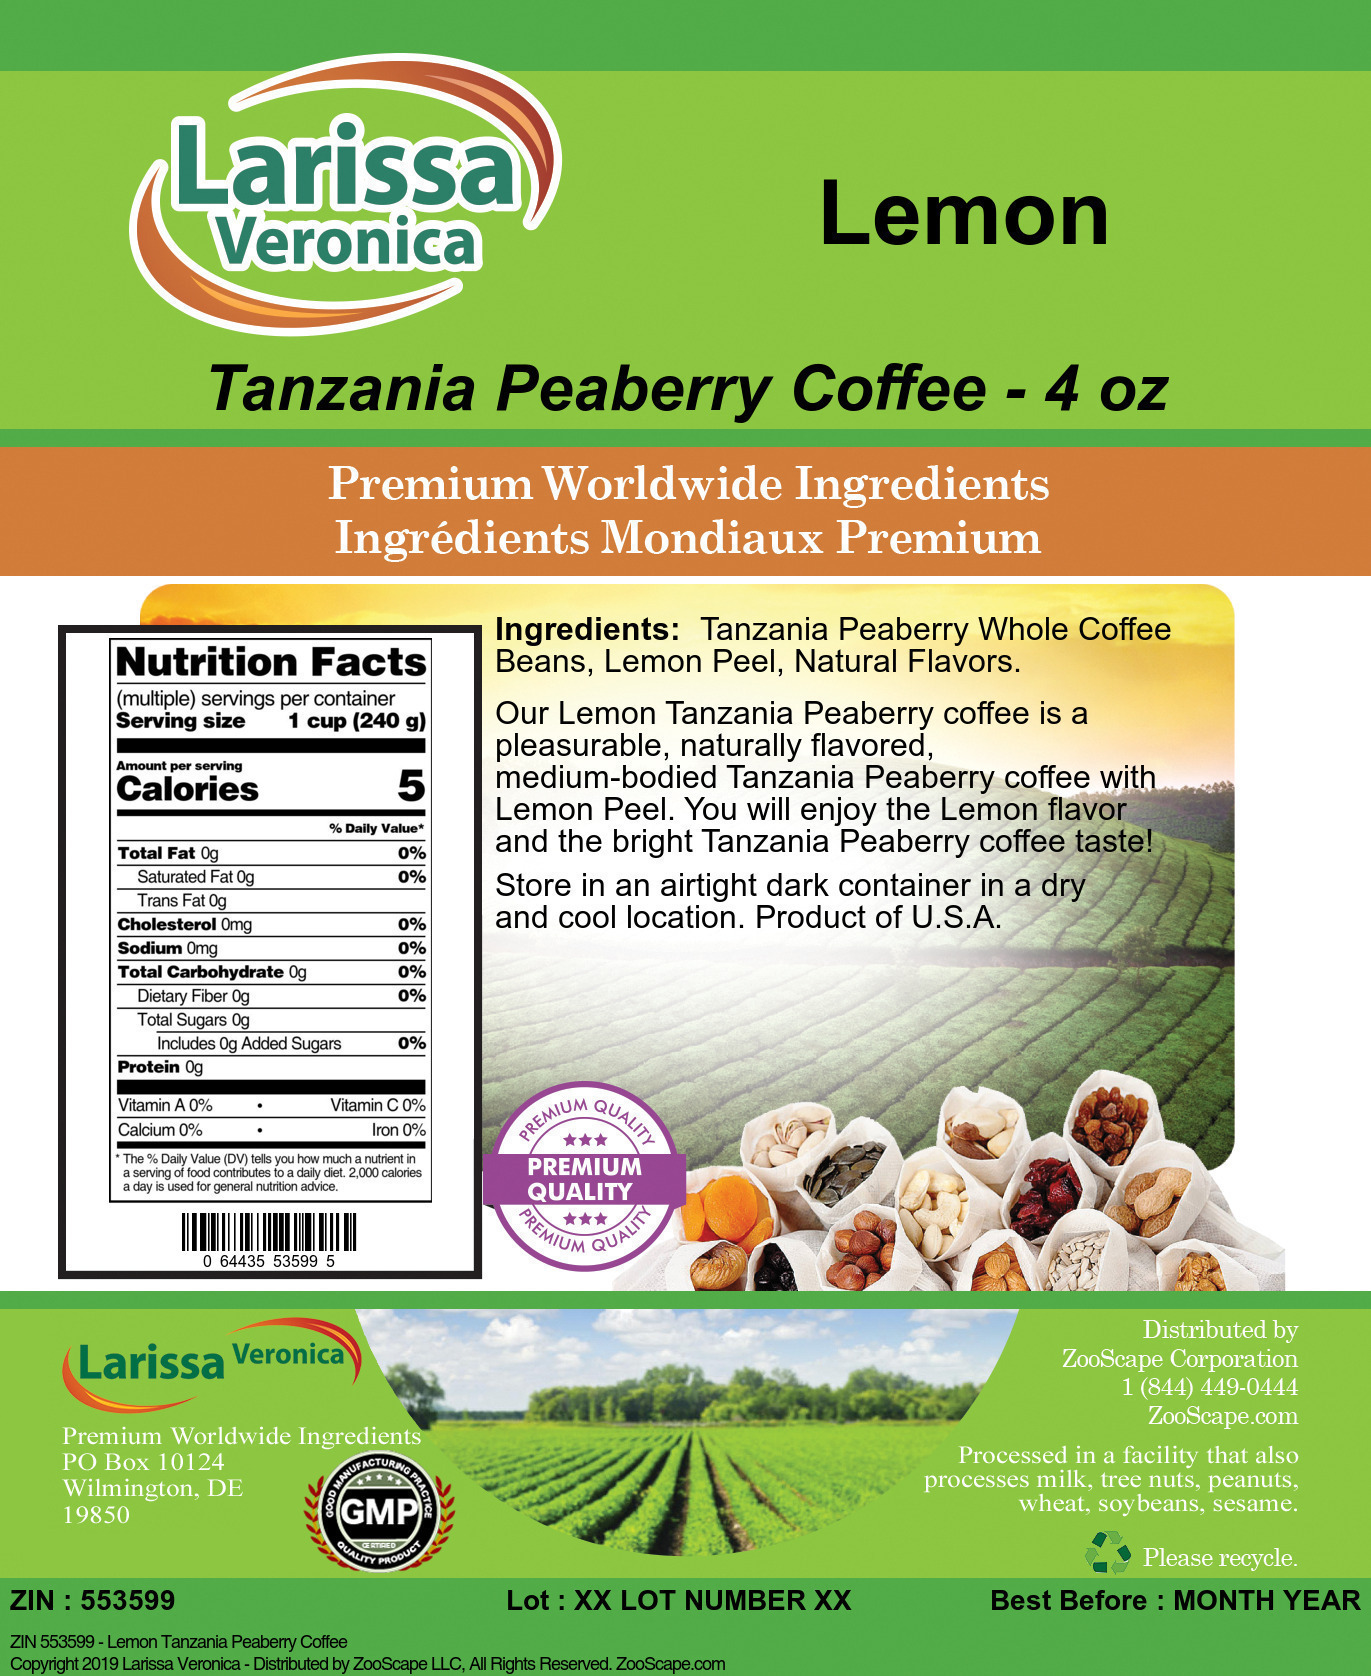 Lemon Tanzania Peaberry Coffee - Label